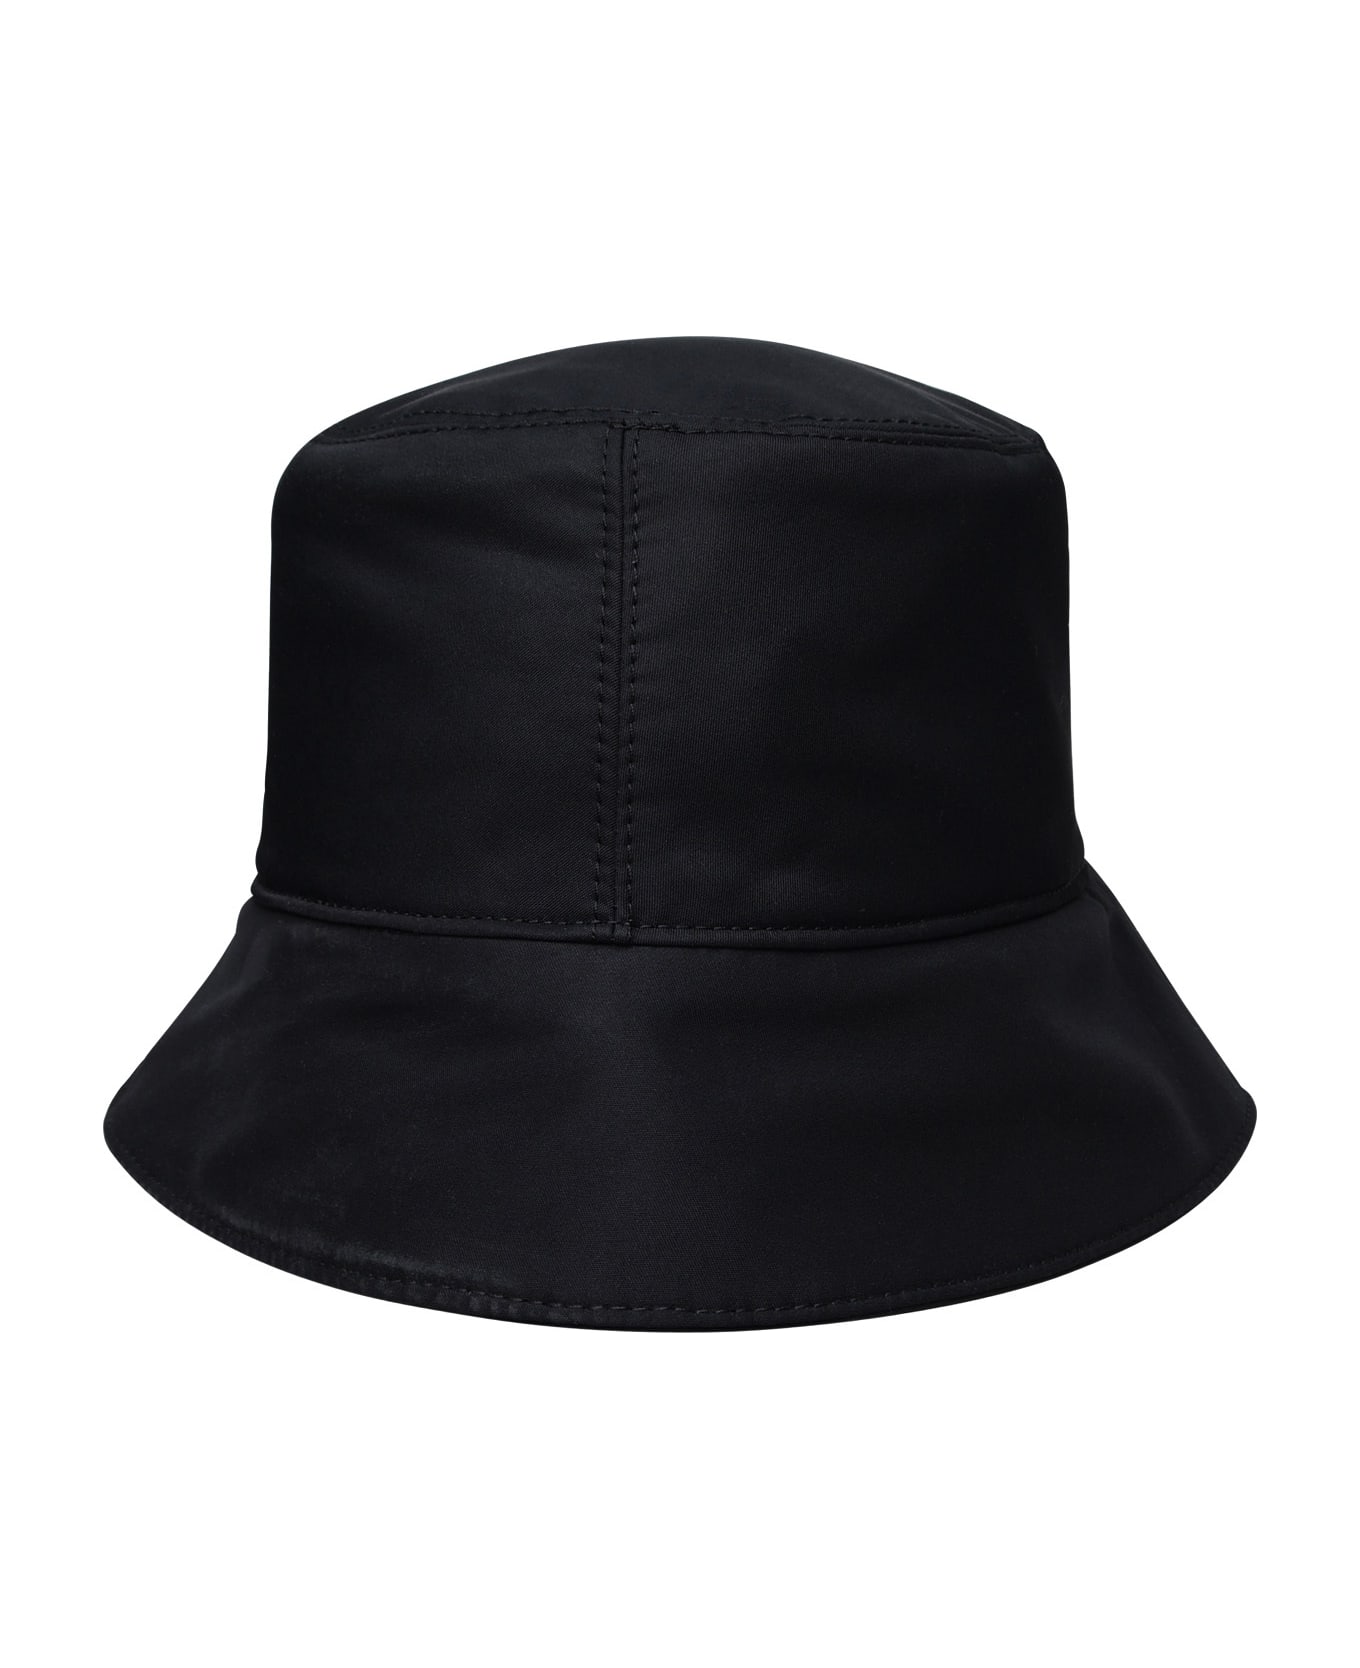 Off-White Black Polyester Hat - Black